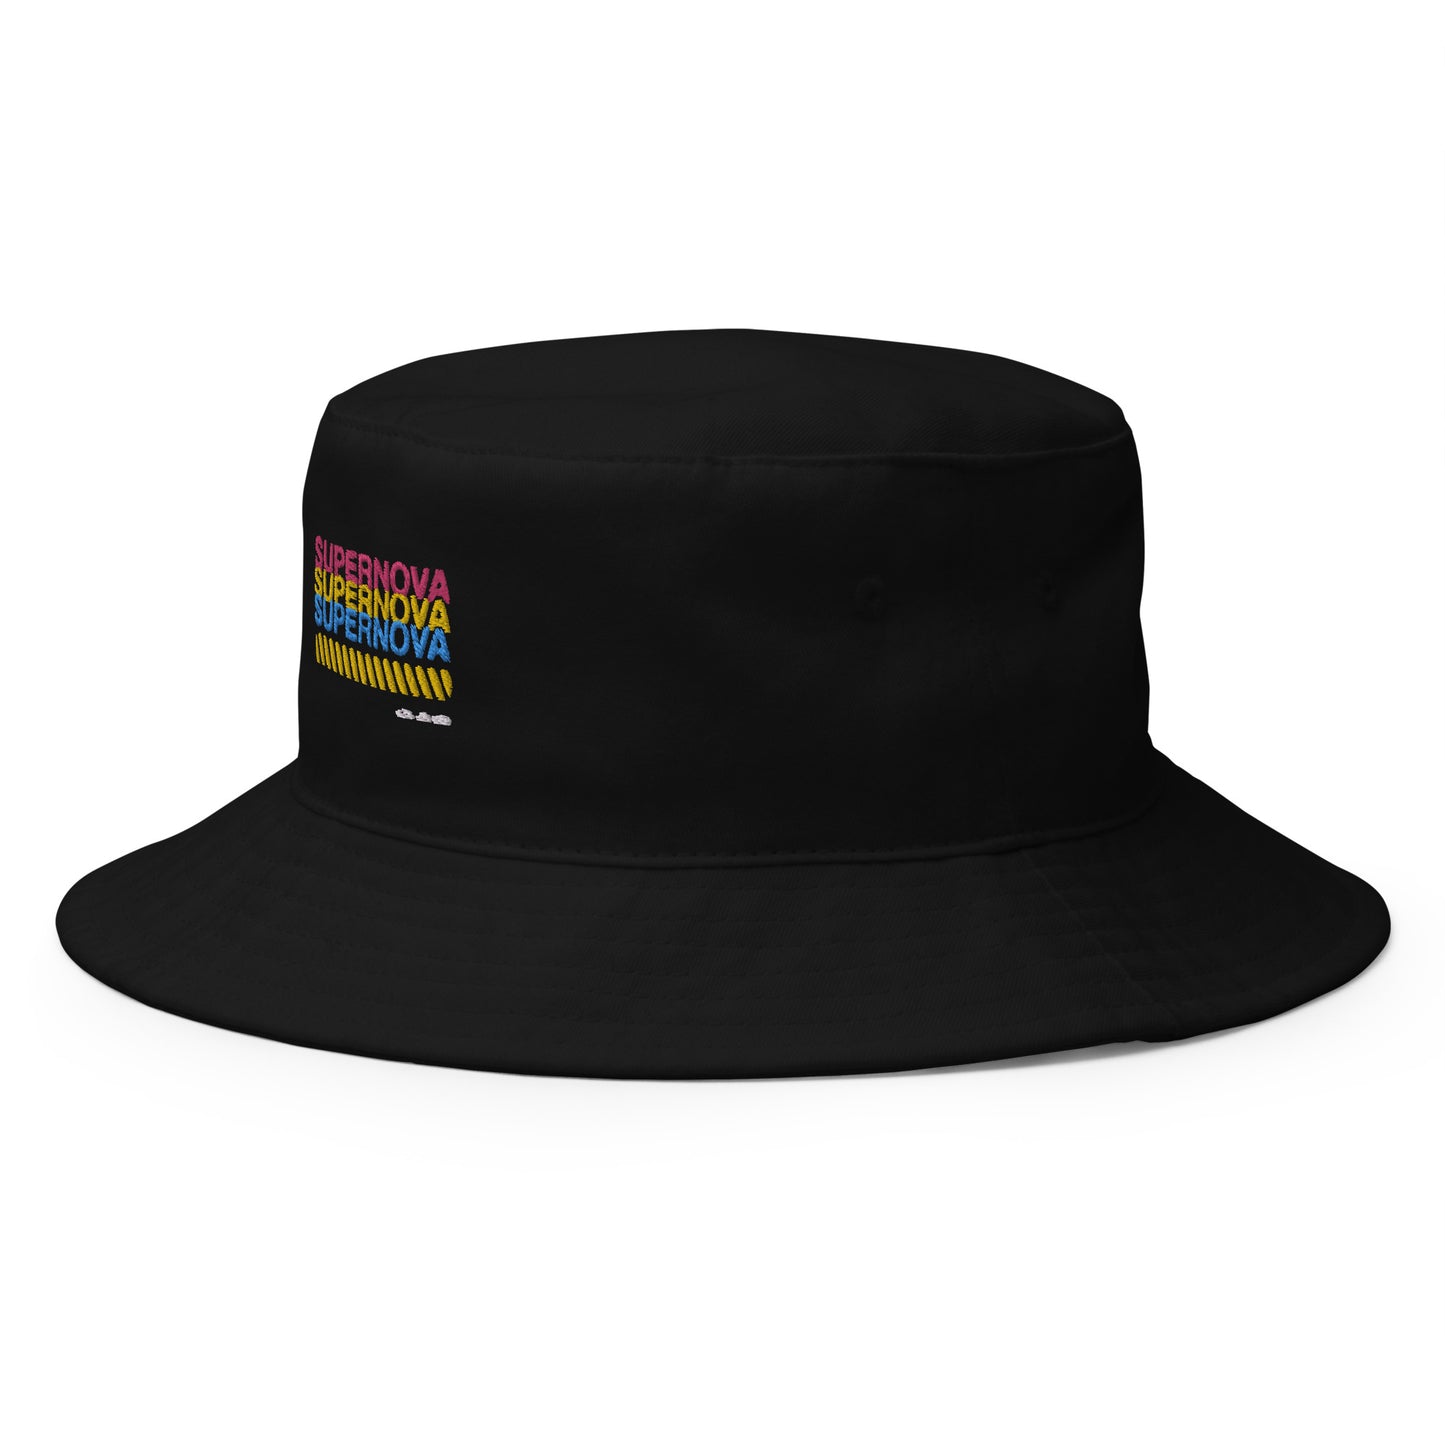 SUPERNOVA Bucket Hat